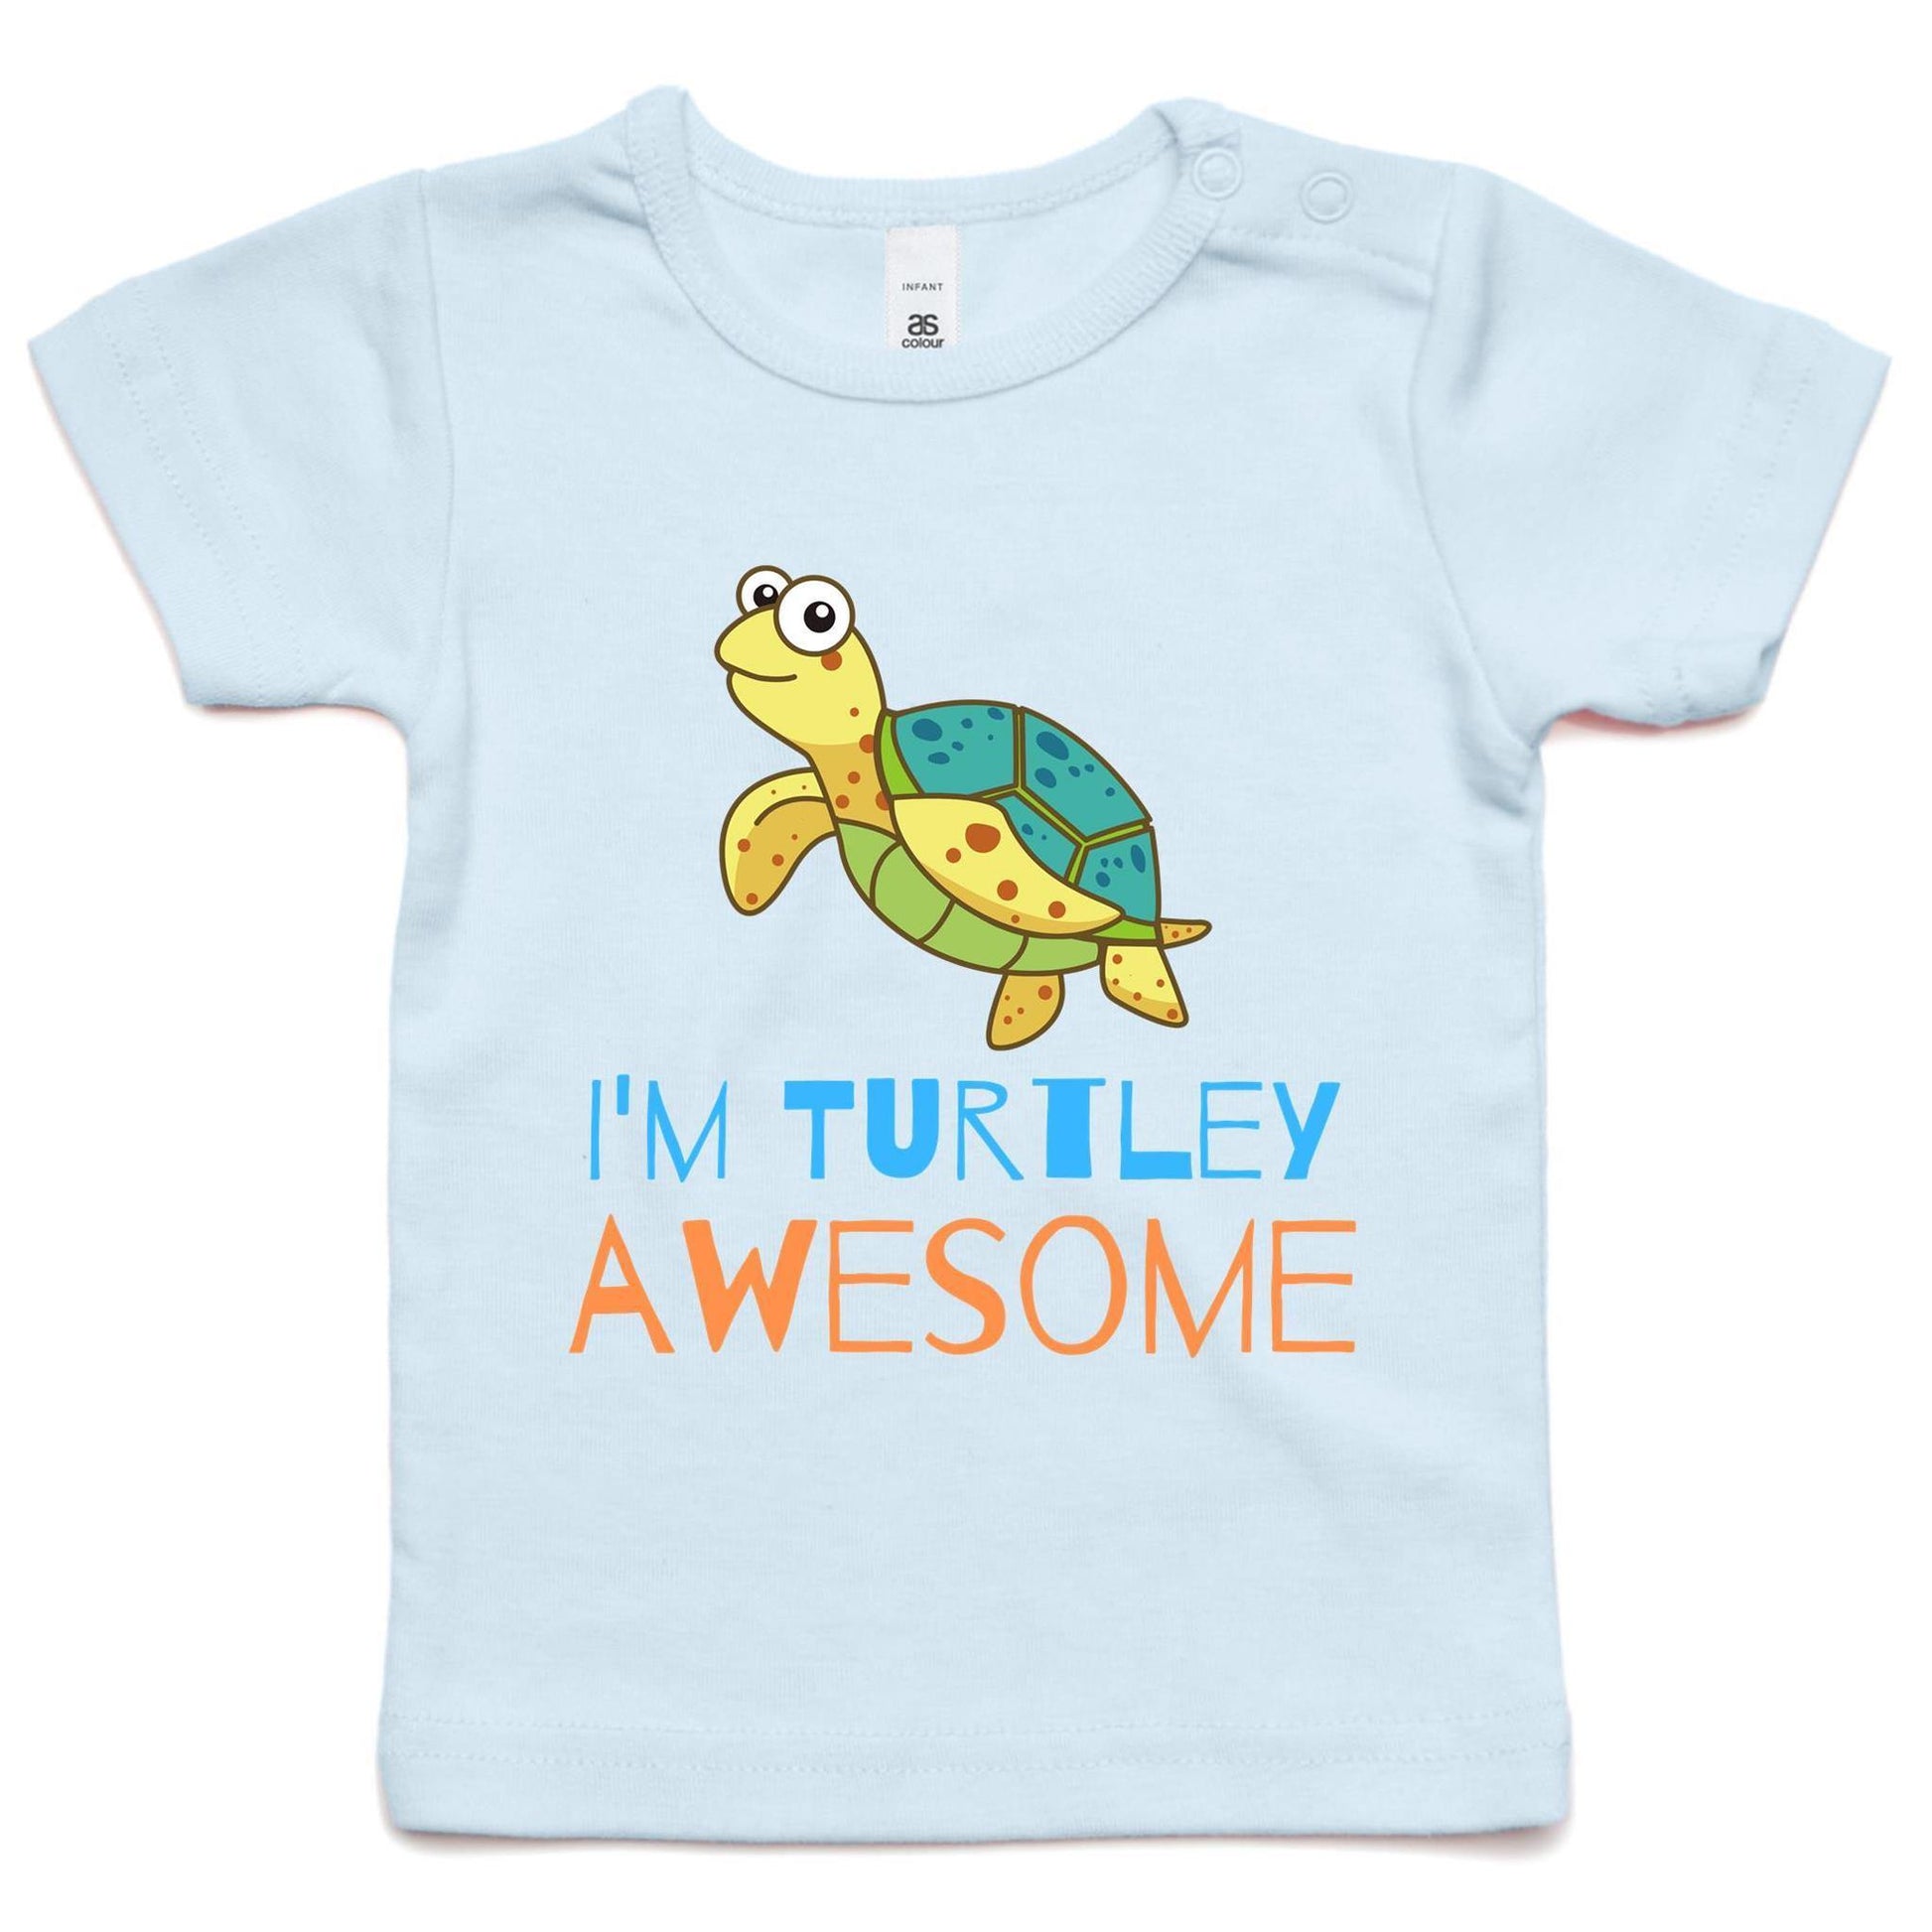 I'm Turtley Awesome - Baby T-shirt Powder Blue Baby T-shirt animal kids